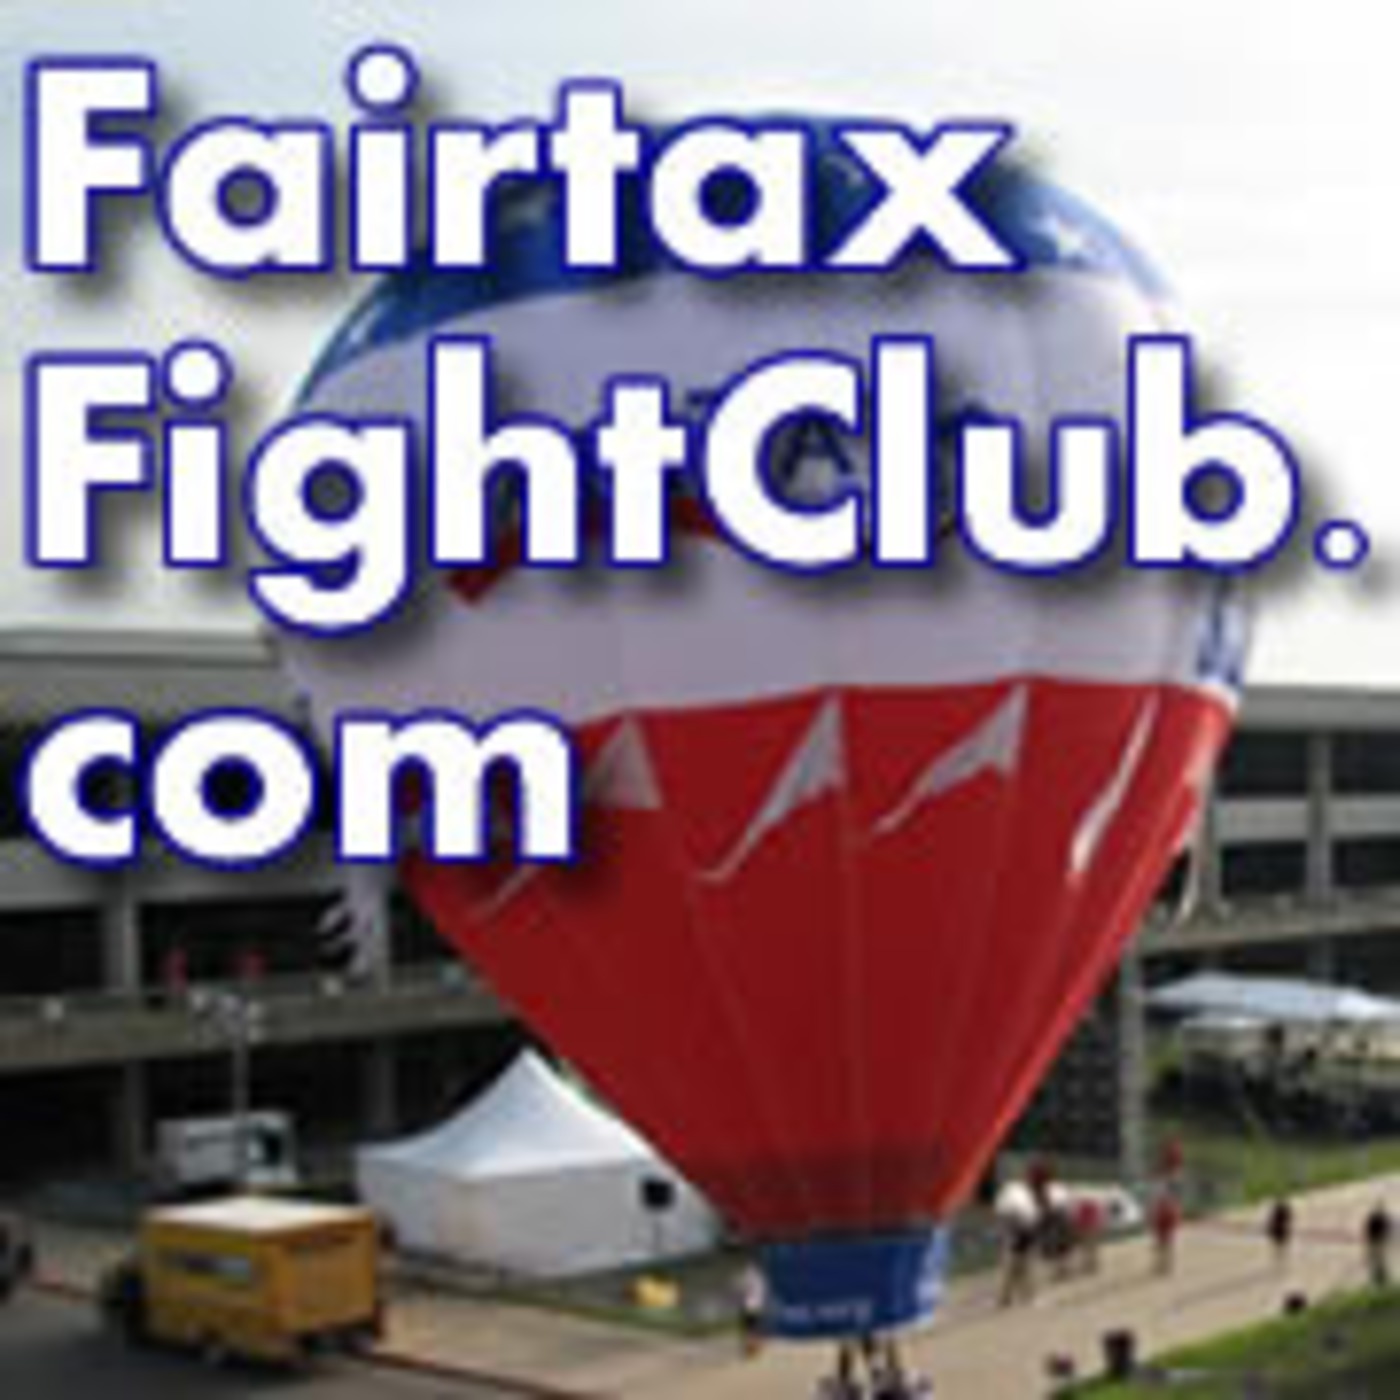 FairtaxFightClub.com